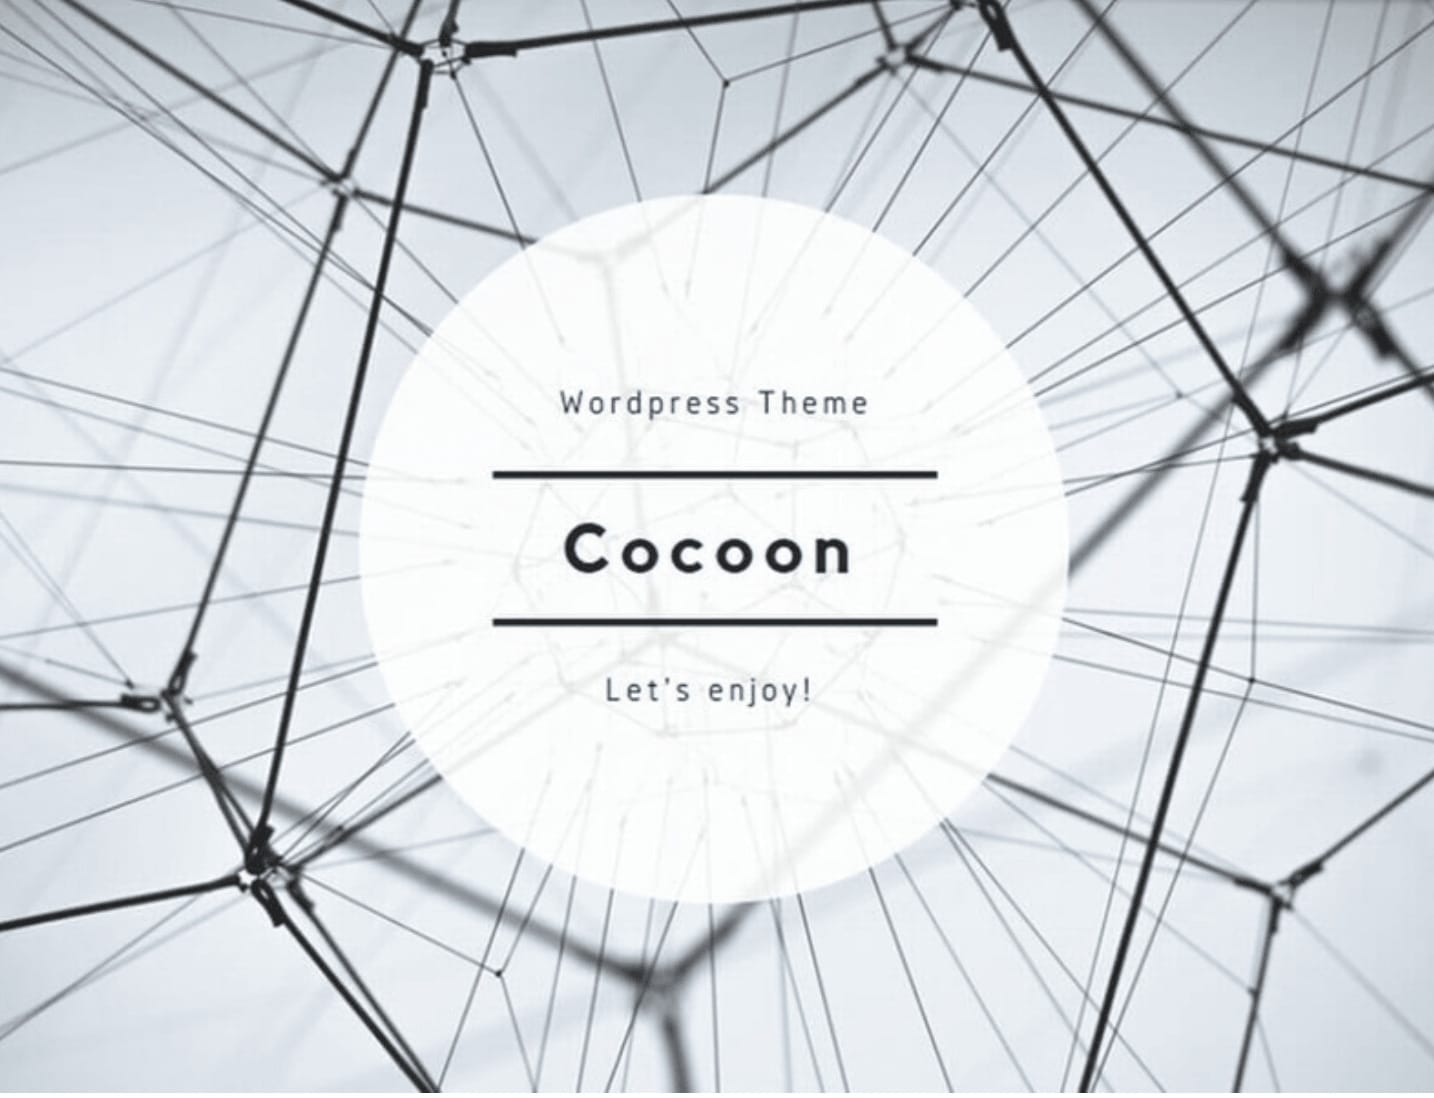 WordPressテーマ「Cocoon」